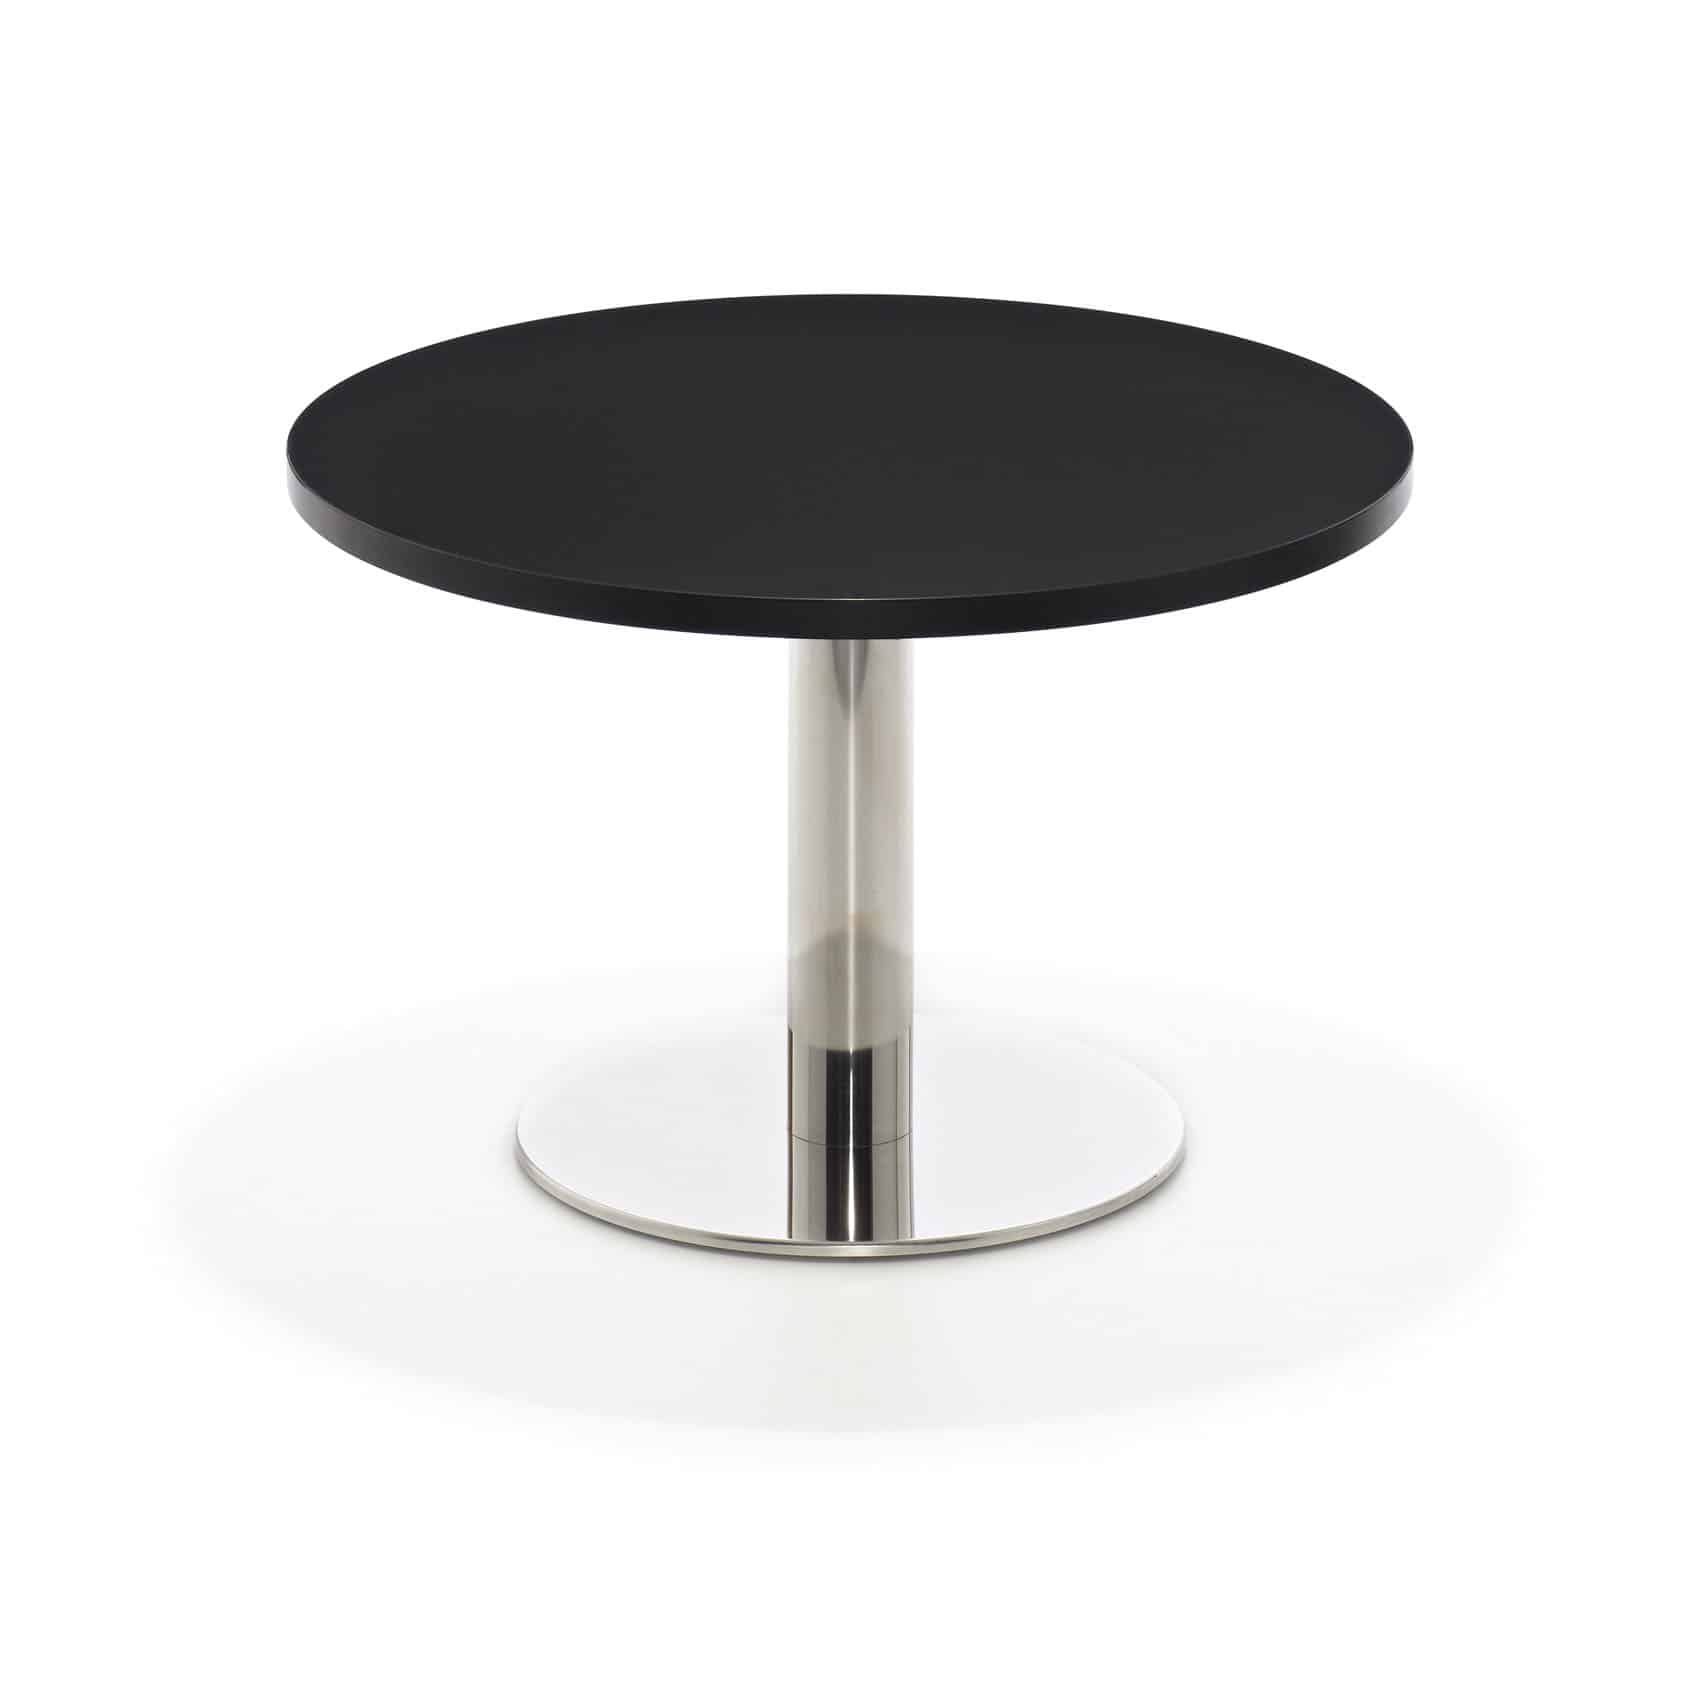 Enzo side table KS Ø 70 cm black